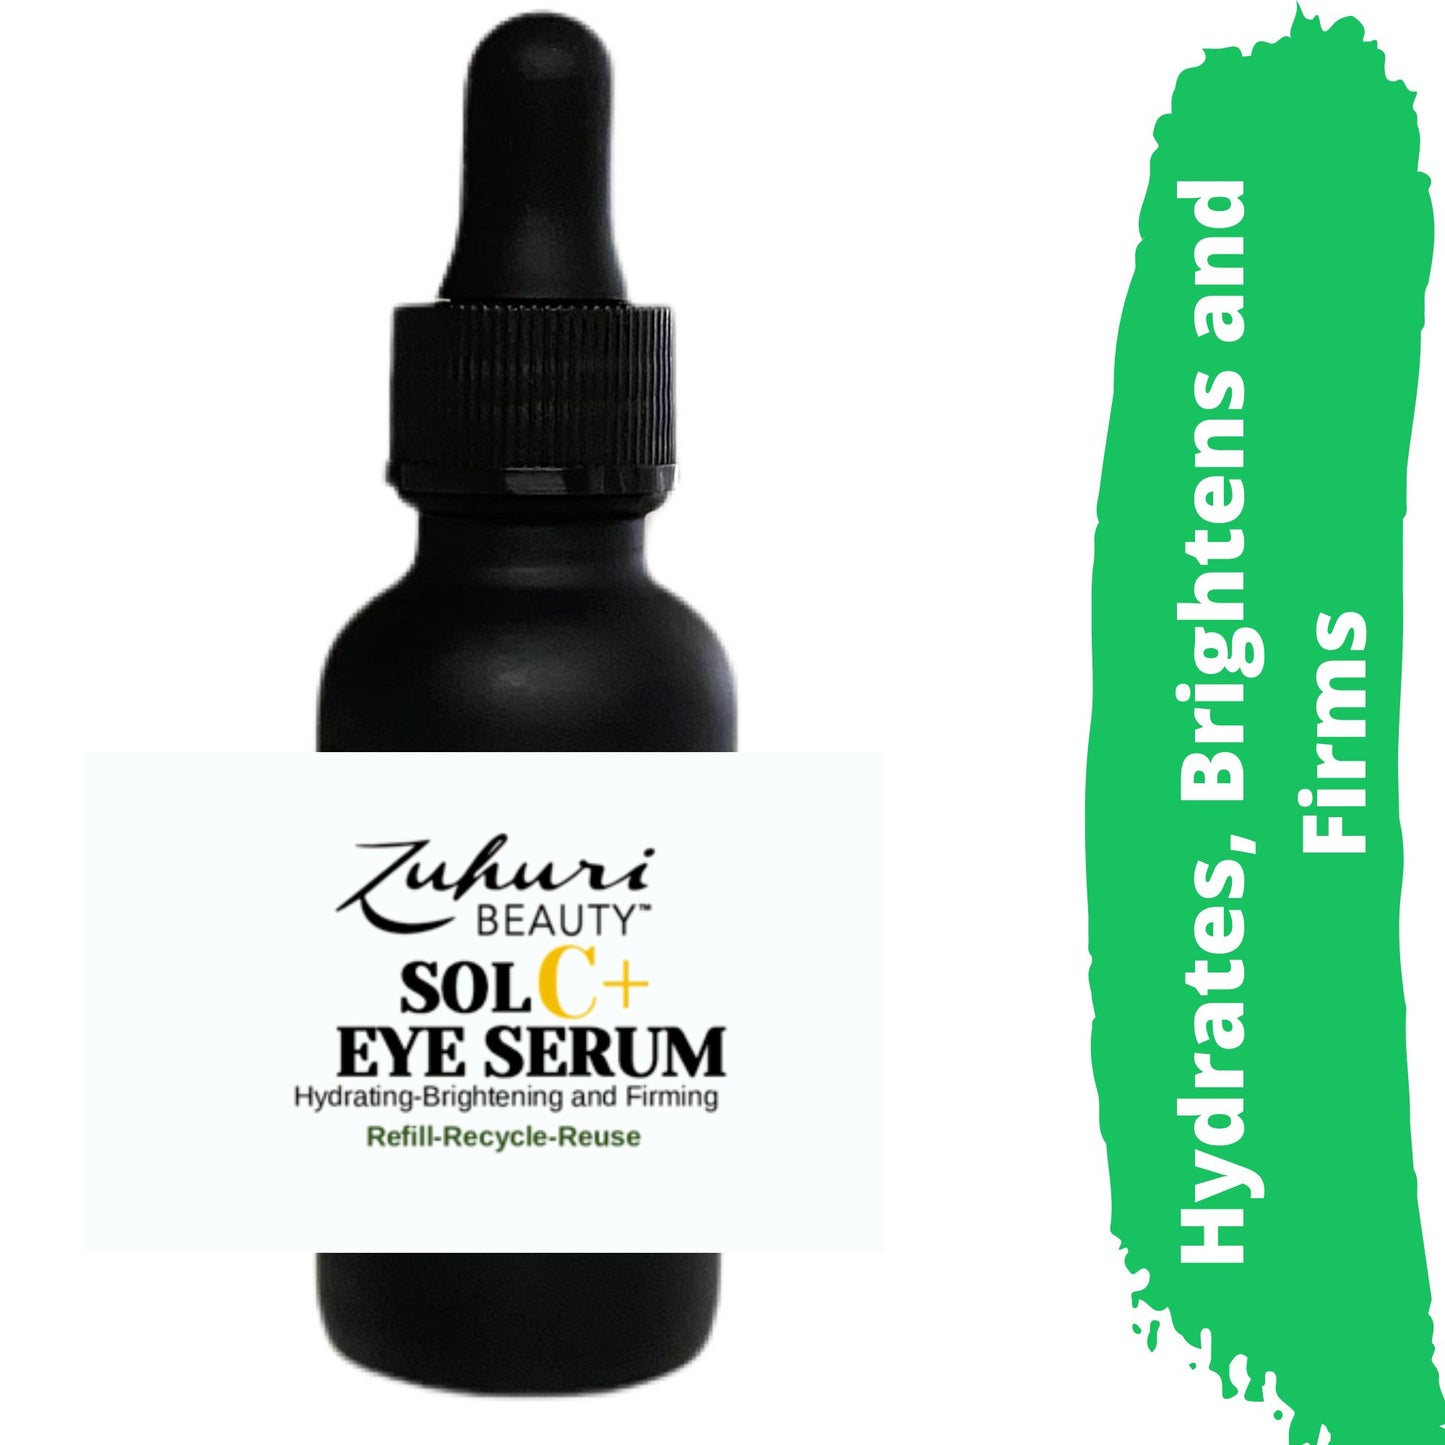 Vitamin C Eye Serum, Vitamin C Serum, Zuhuri Beauty eye Serum, Serum for dark circles under eyes, bags under eyes